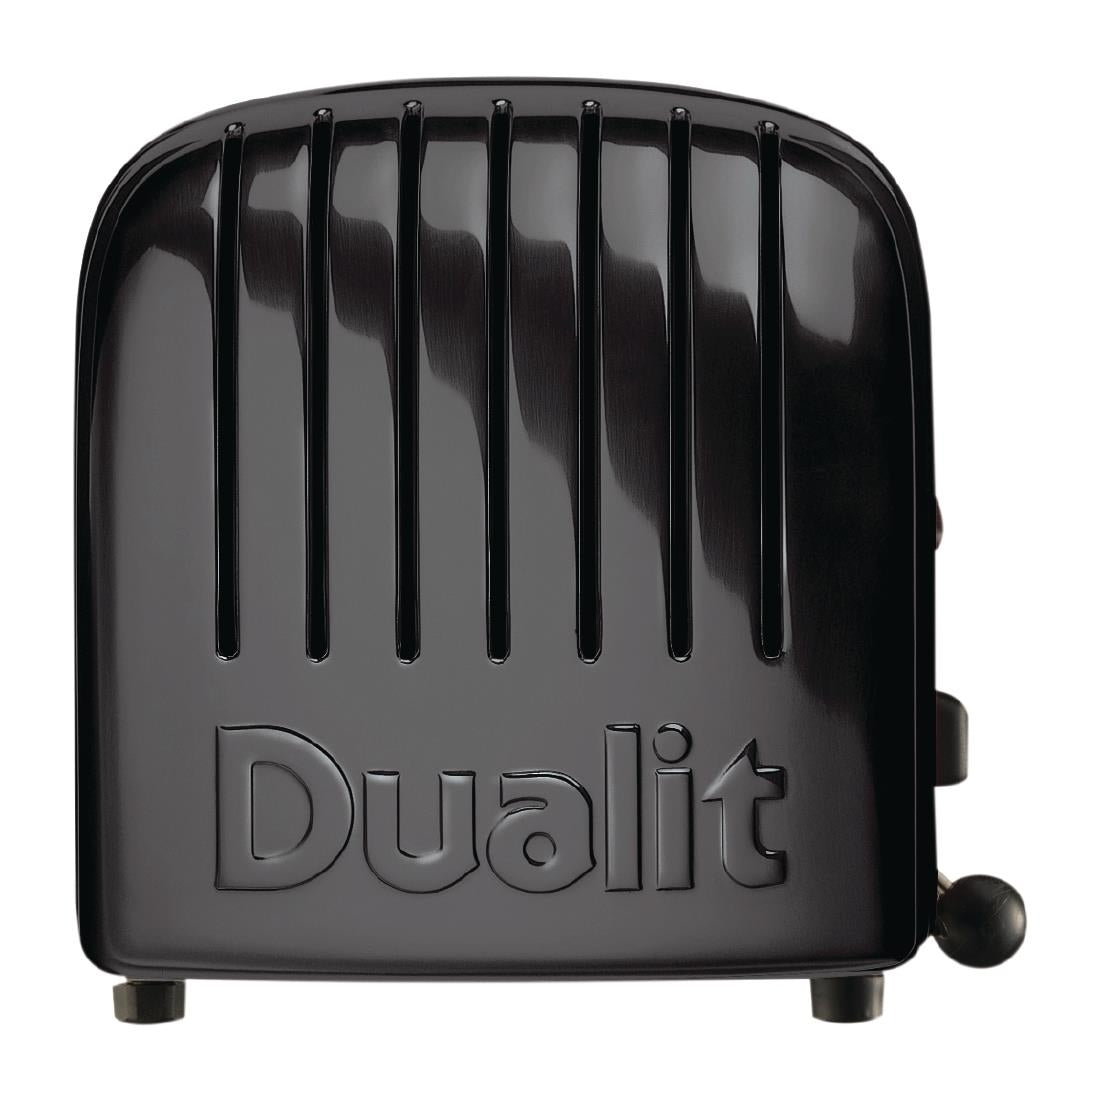 Dualit 6 Slice Vario Toaster Black 60145 JD Catering Equipment Solutions Ltd